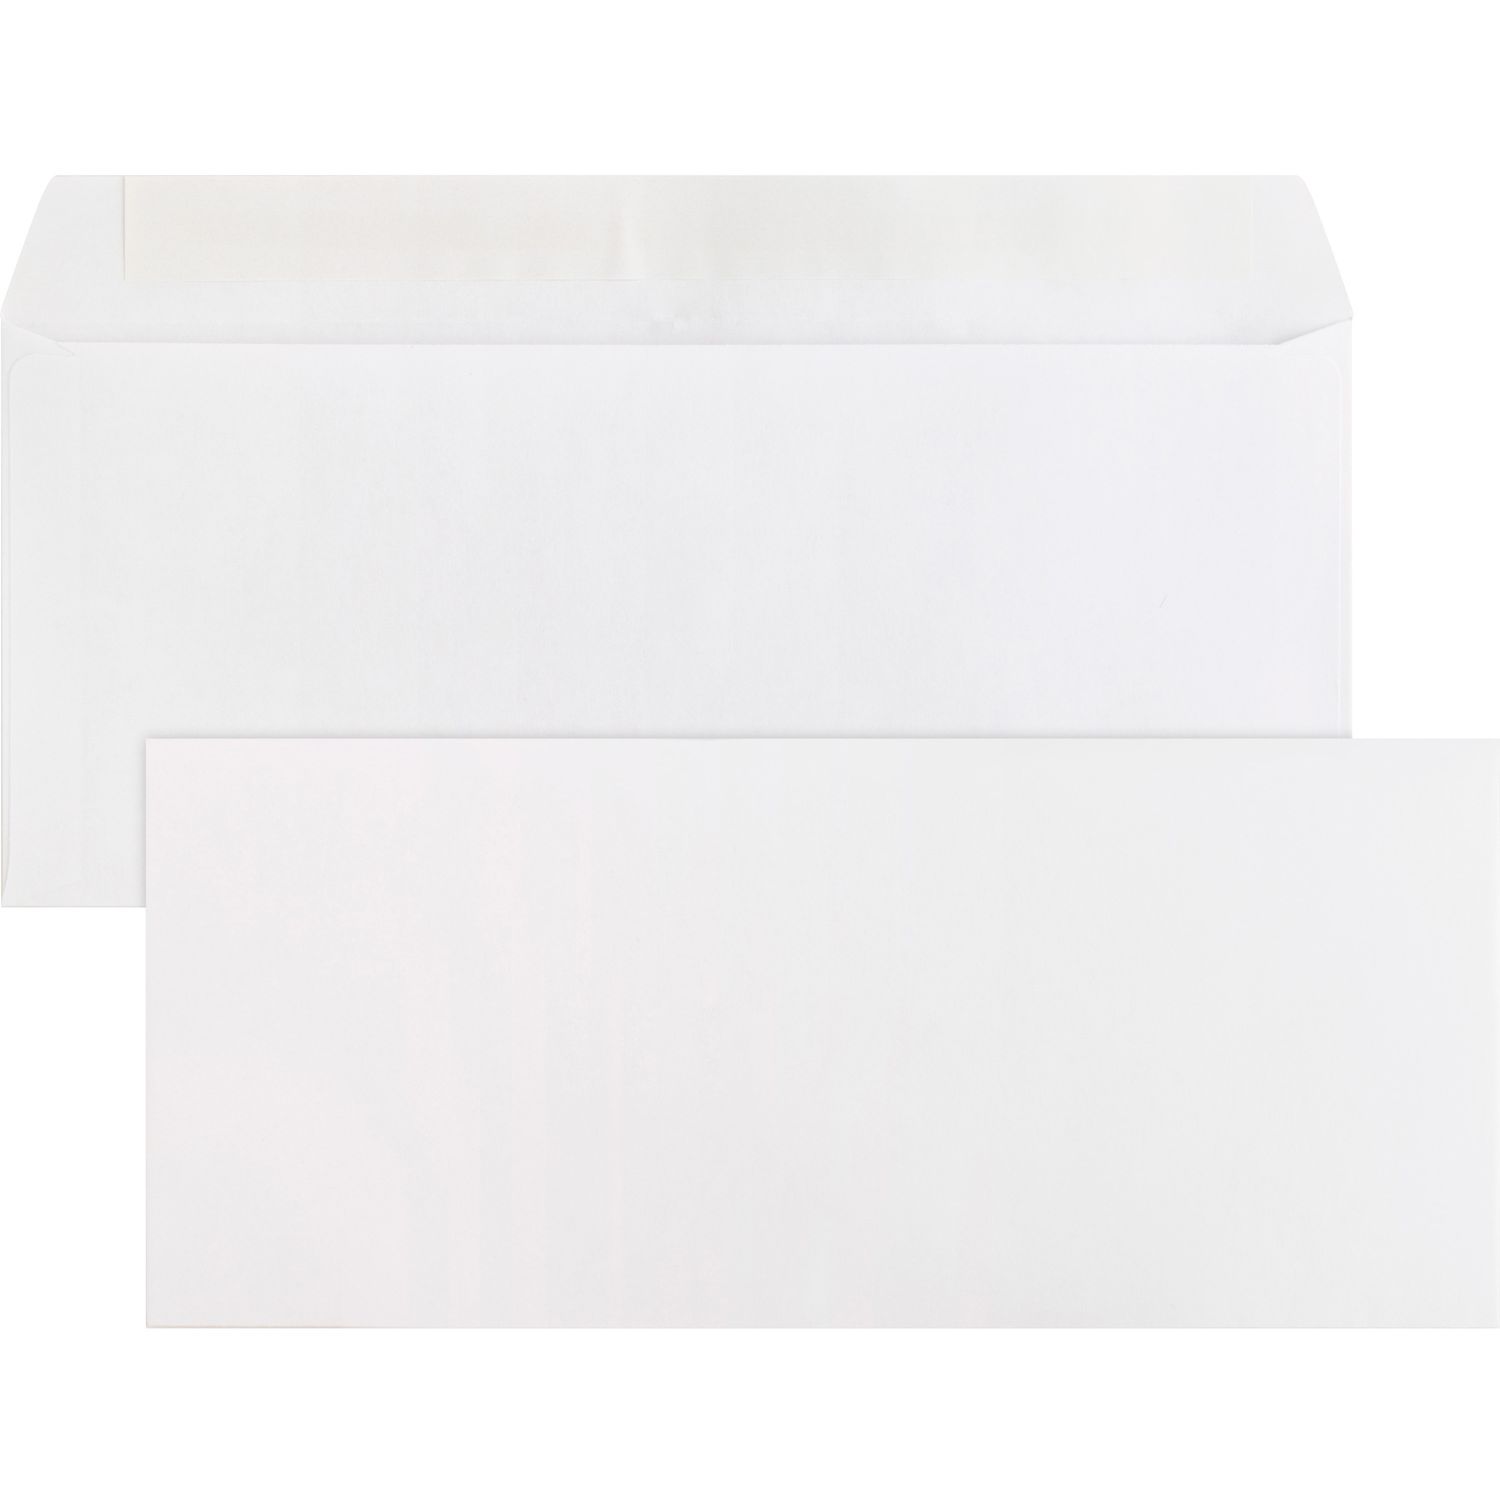 Plain Peel/Seal Business Envelopes Business, #10, 9 1/2" Width x 4 1/8" Length, 24 lb, Peel & Seal, Wove, 500 / Box, White